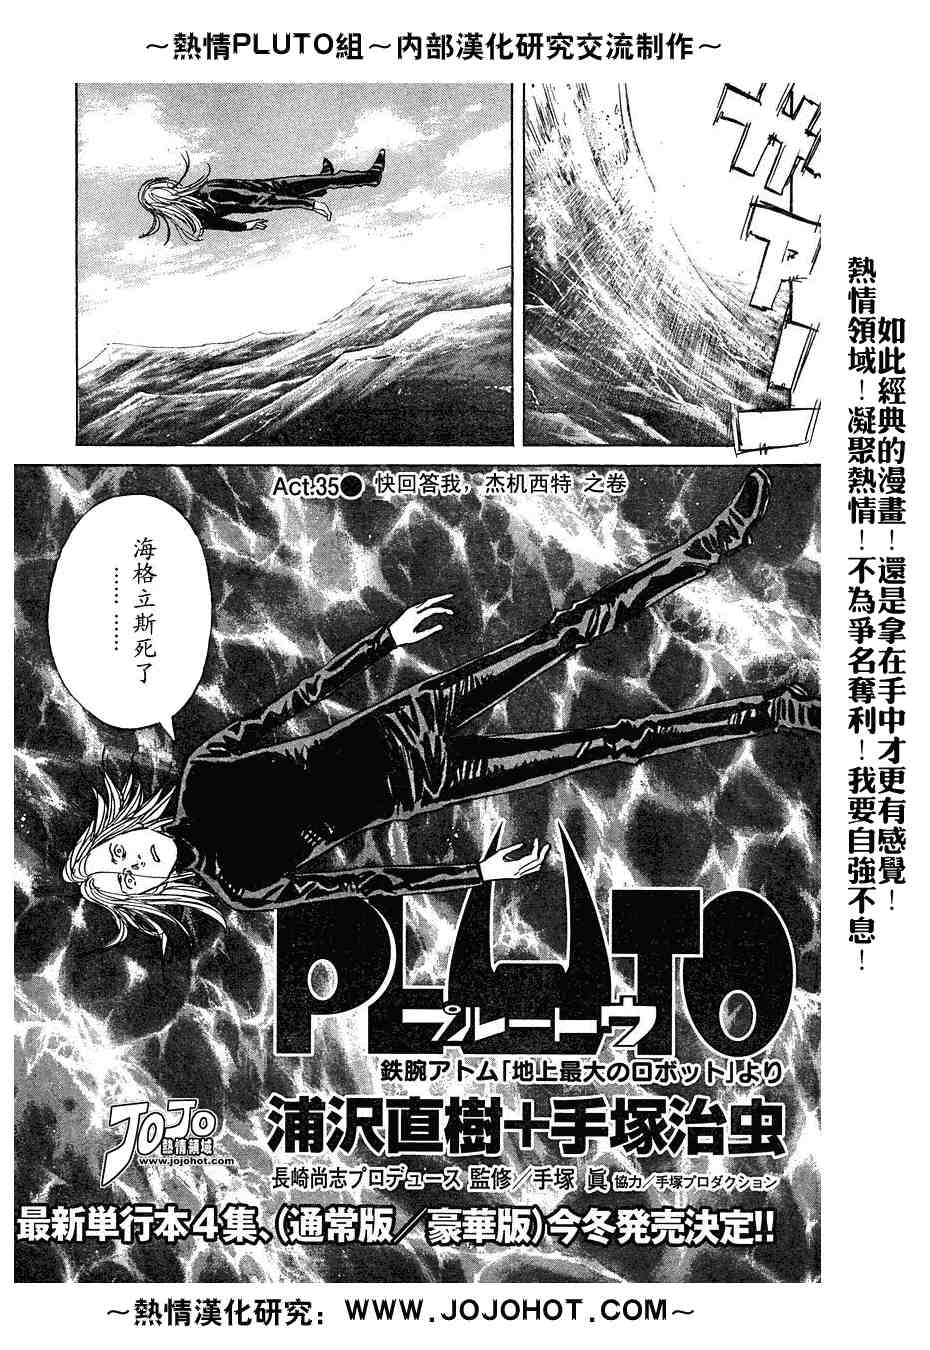 《PLUTO-冥界王》漫画 pluto035集